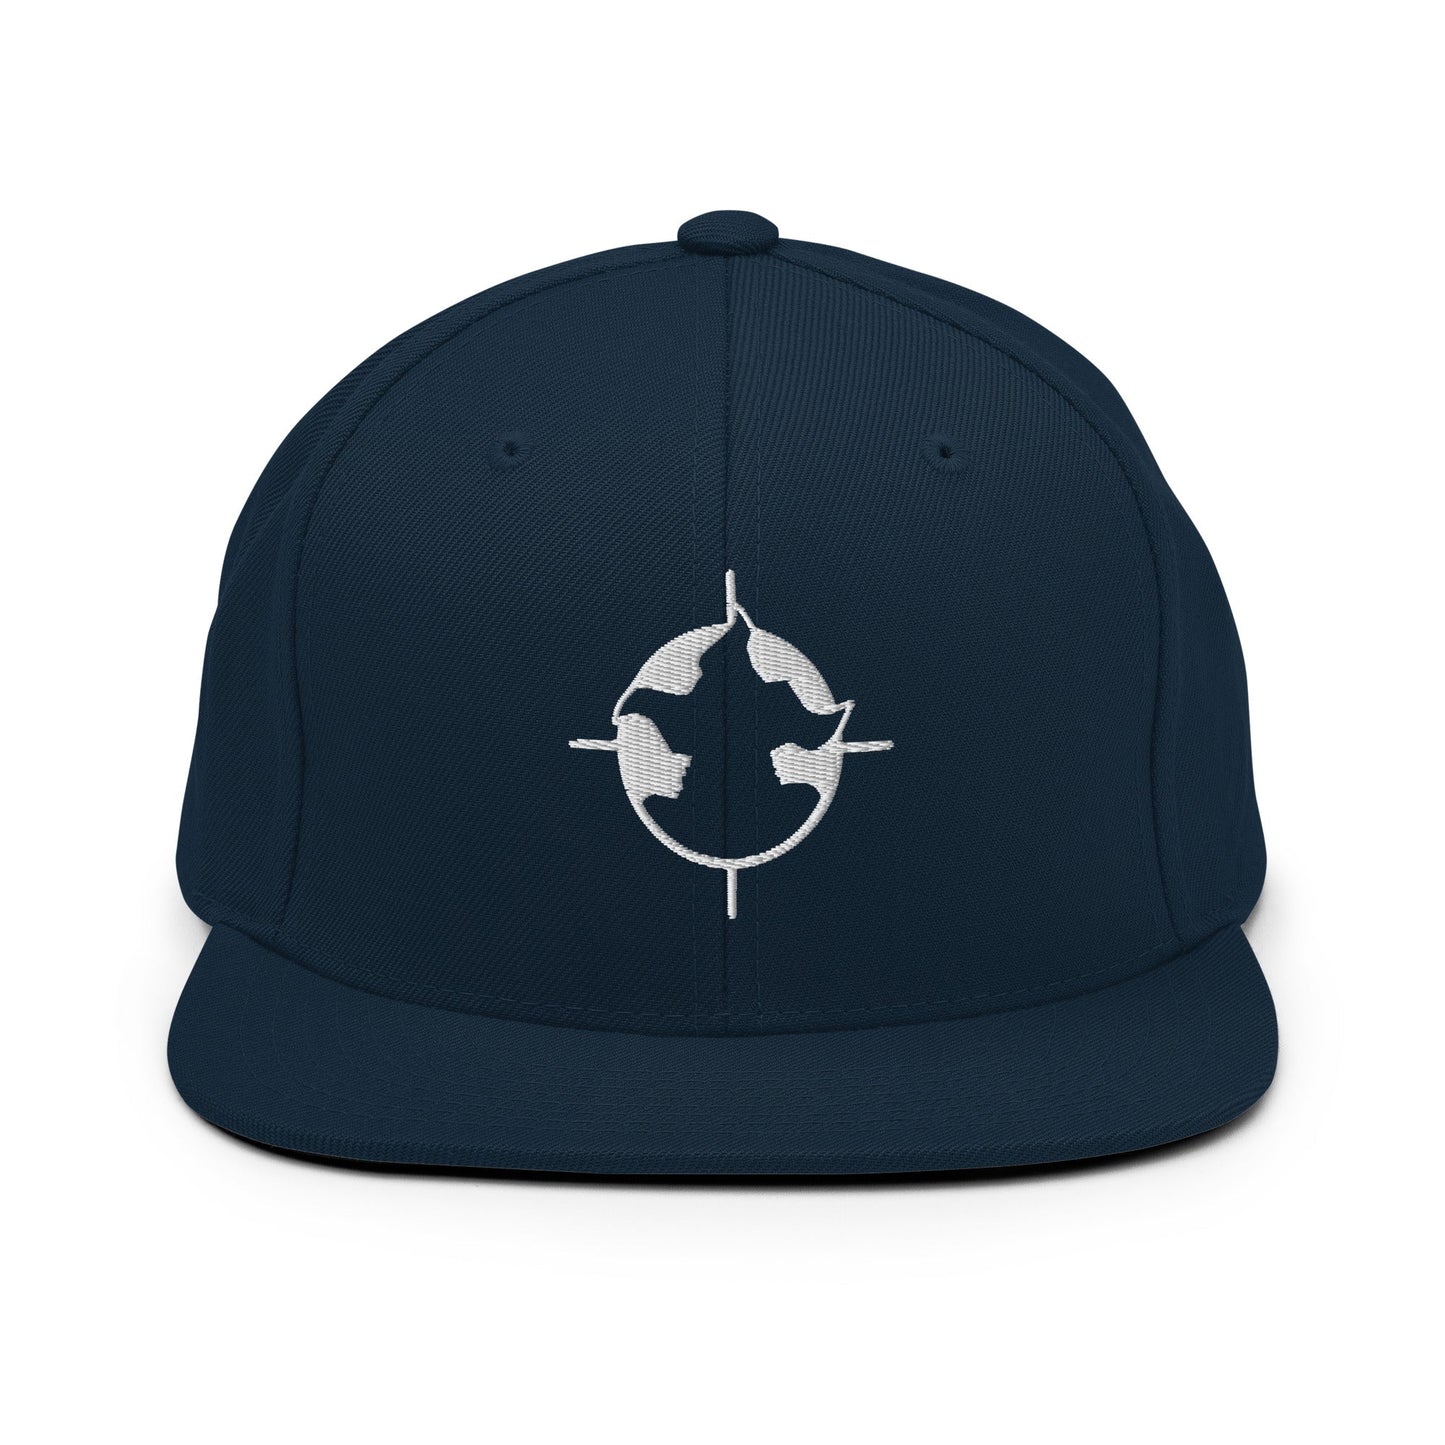 Sogeking Embroidered Unisex Anime Hat Snap Back Hat